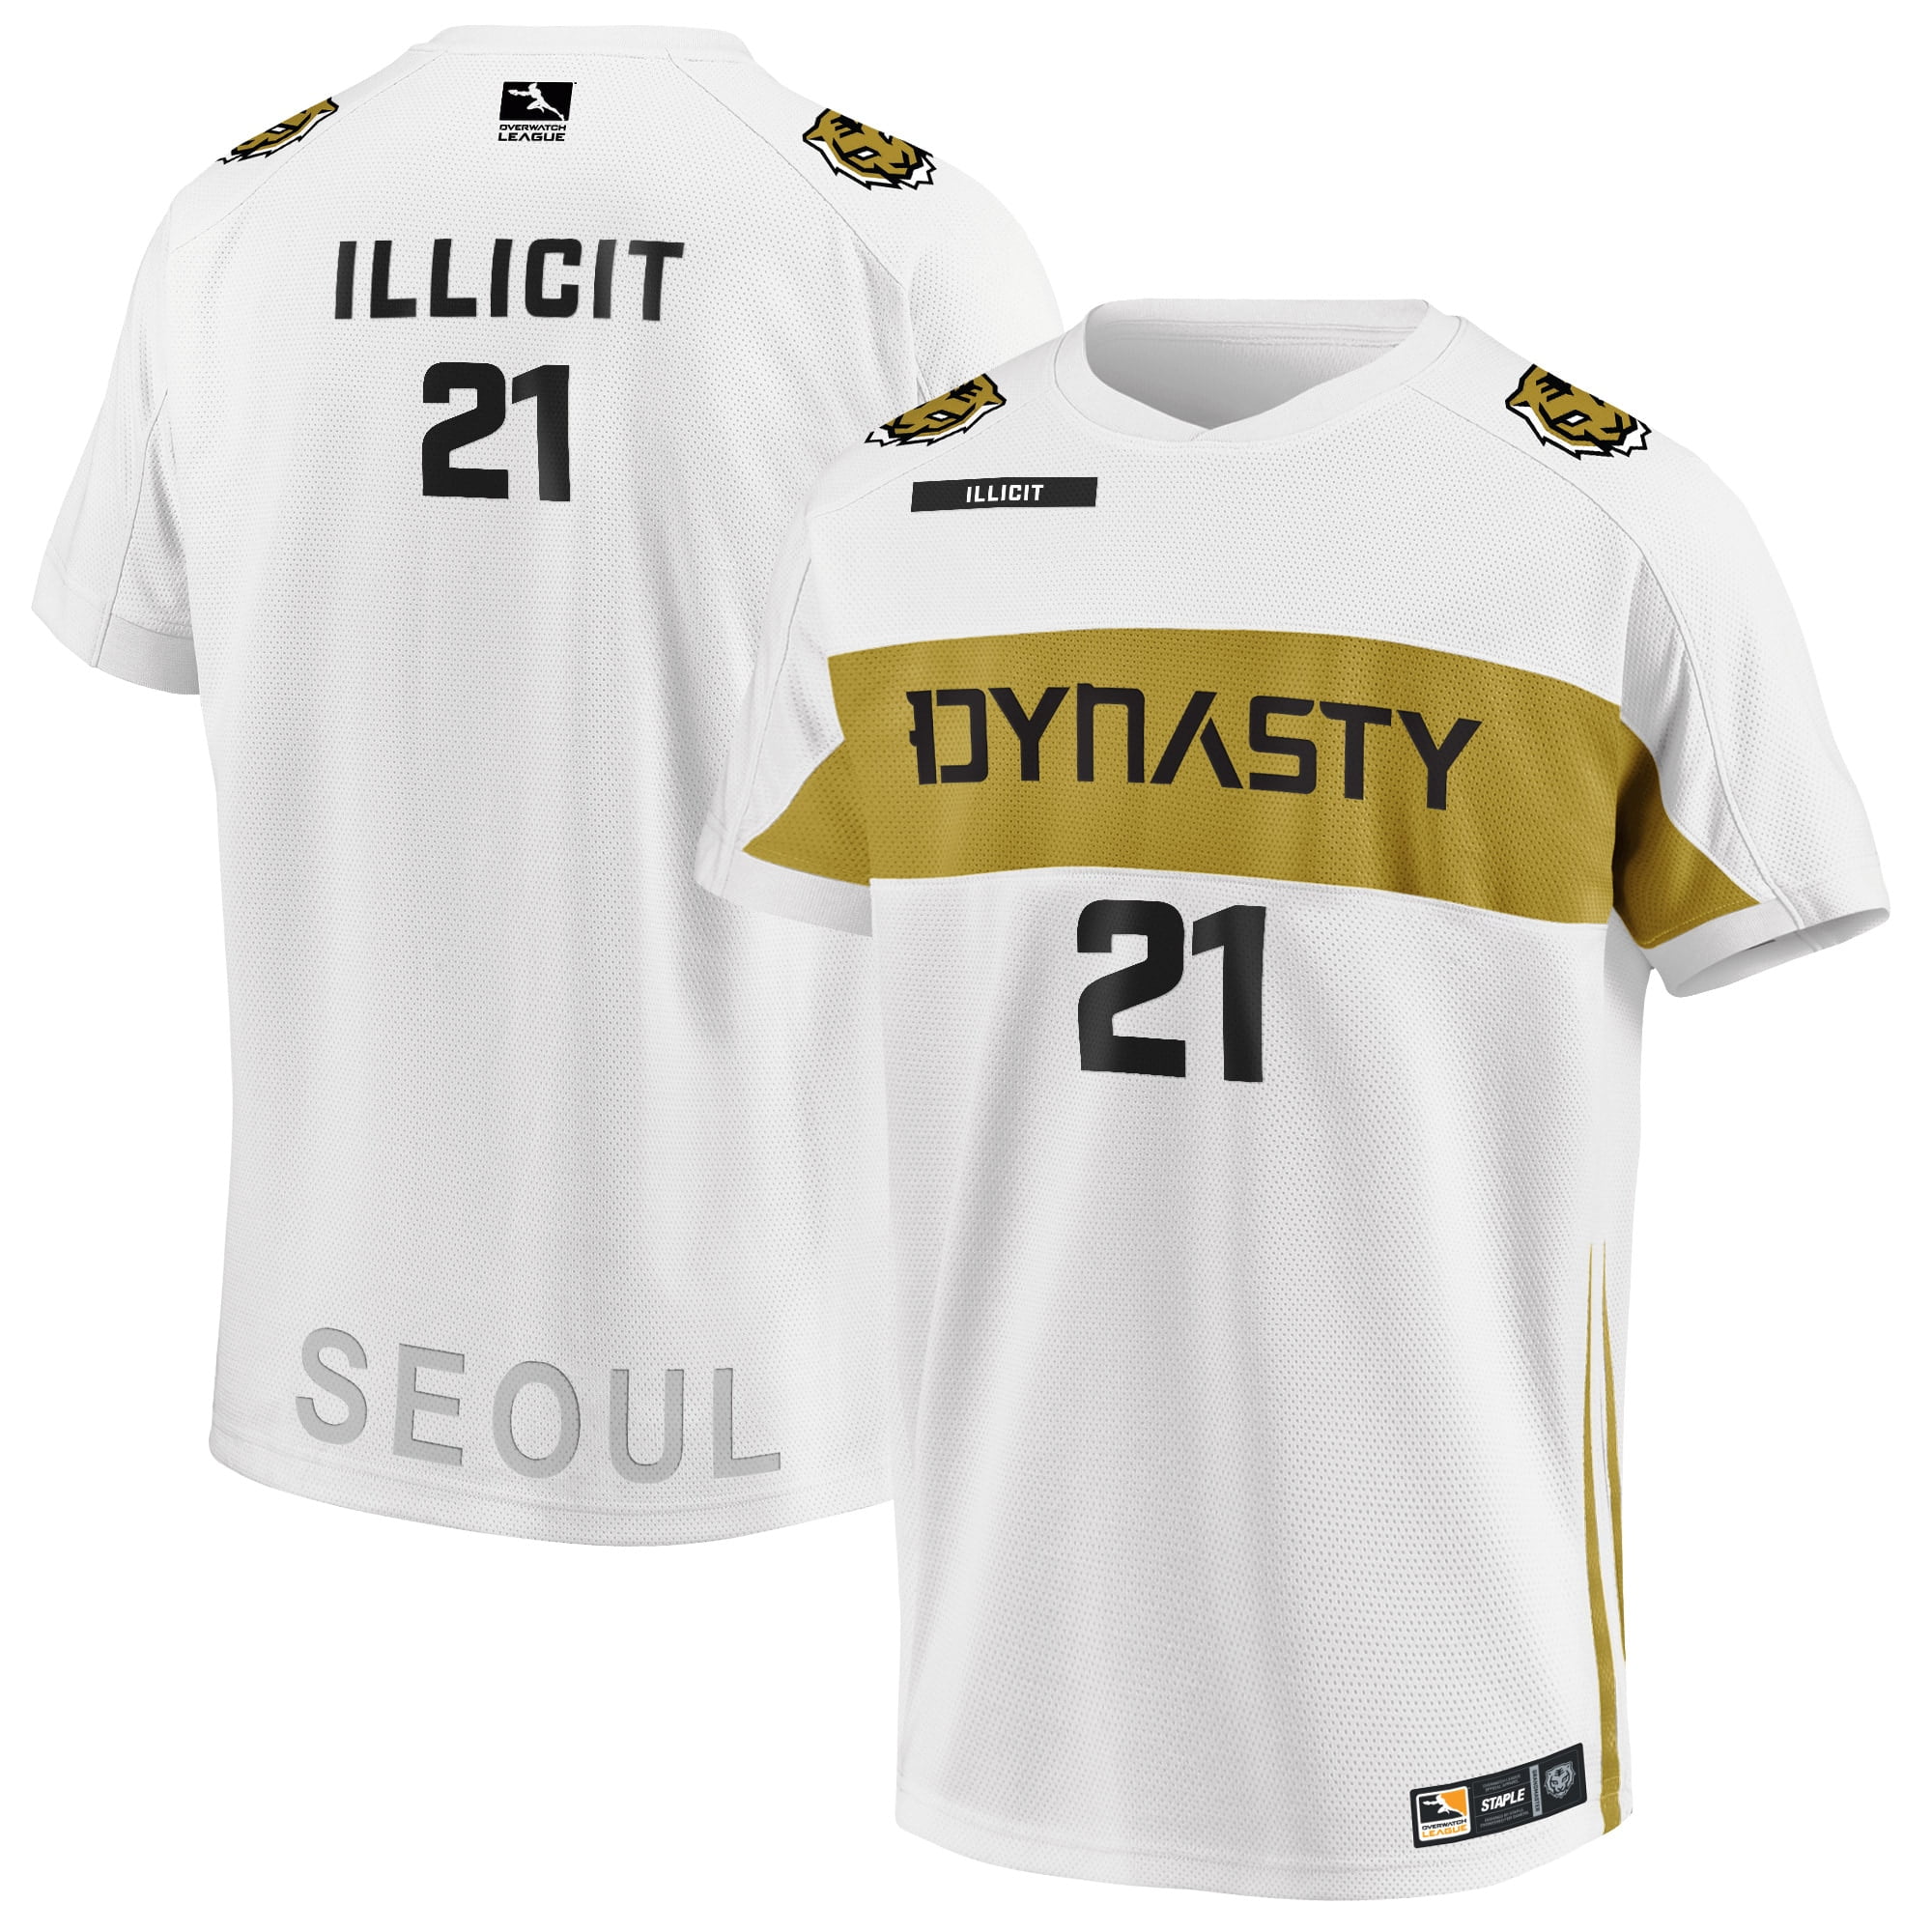 dynasty dodgers jersey